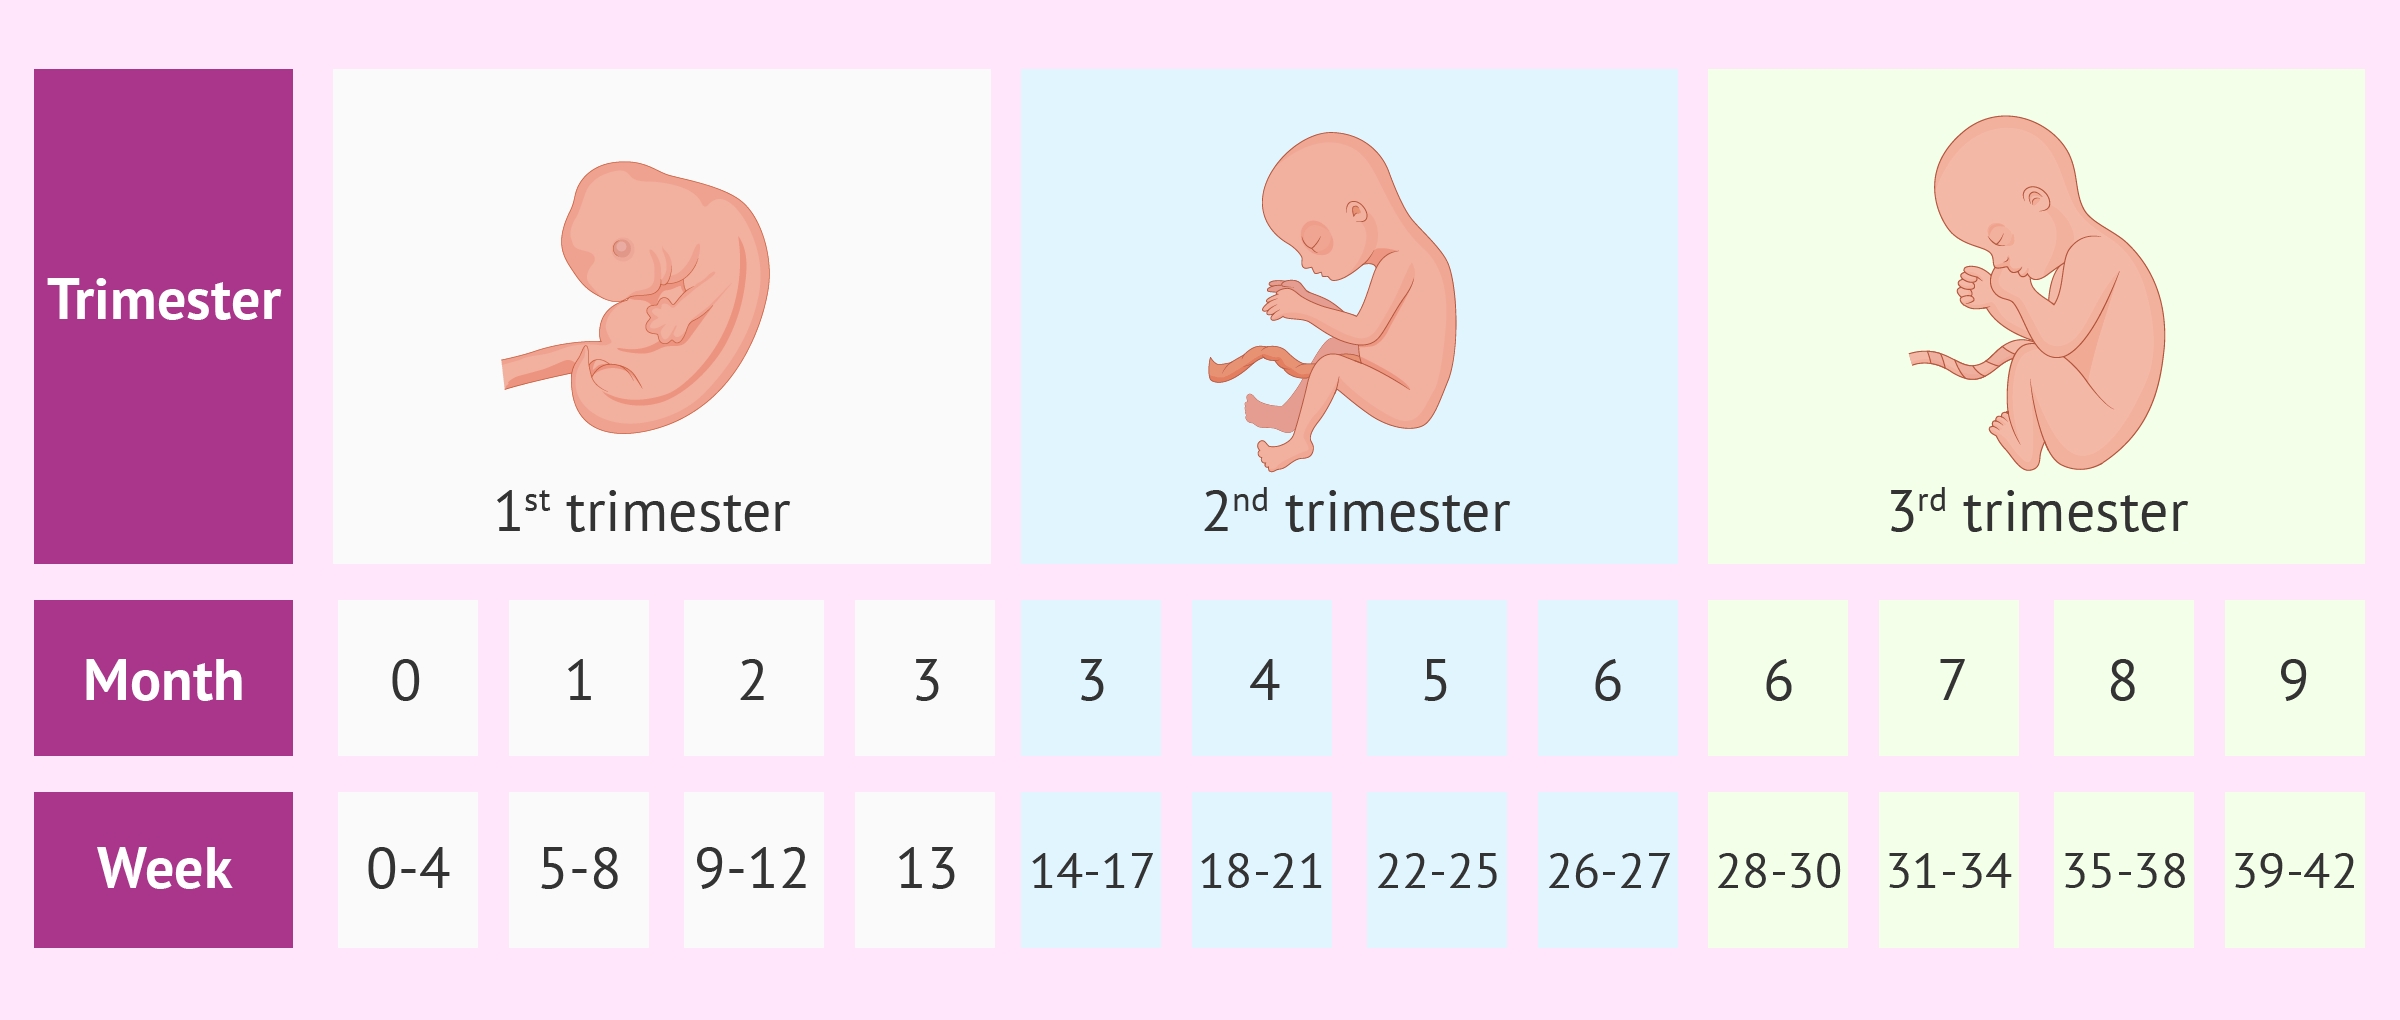 Development Of Baby In Each Trimester